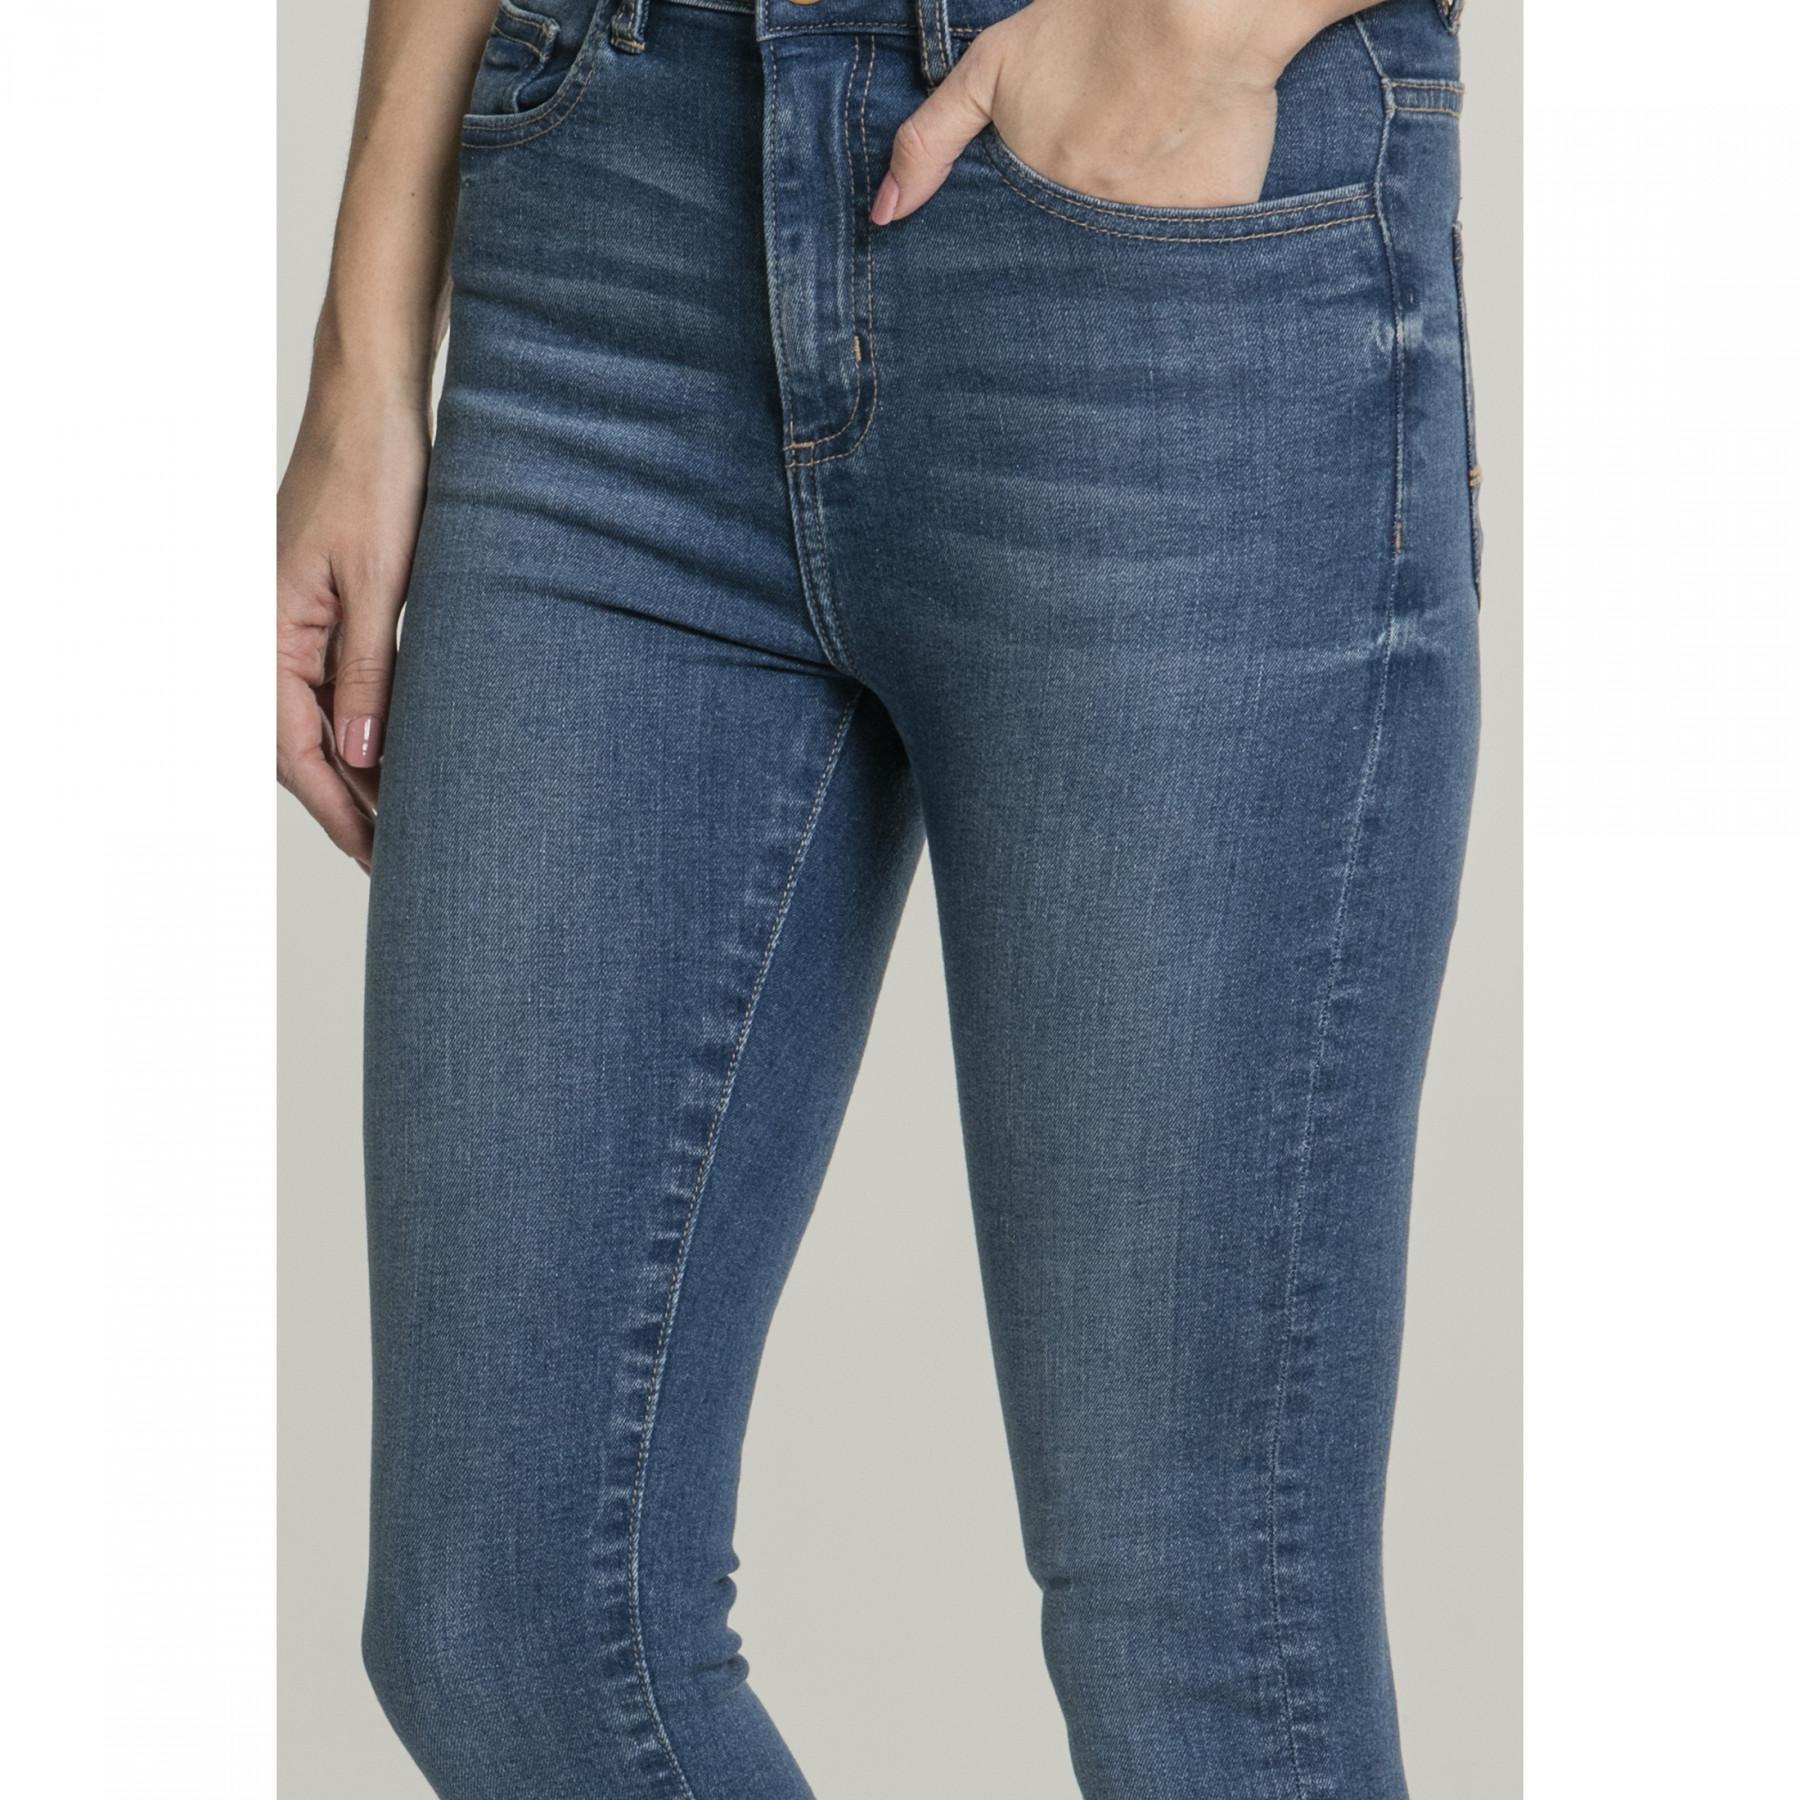 Pantalon jeans femme Urban Classics high waist slim (grandes tailles)